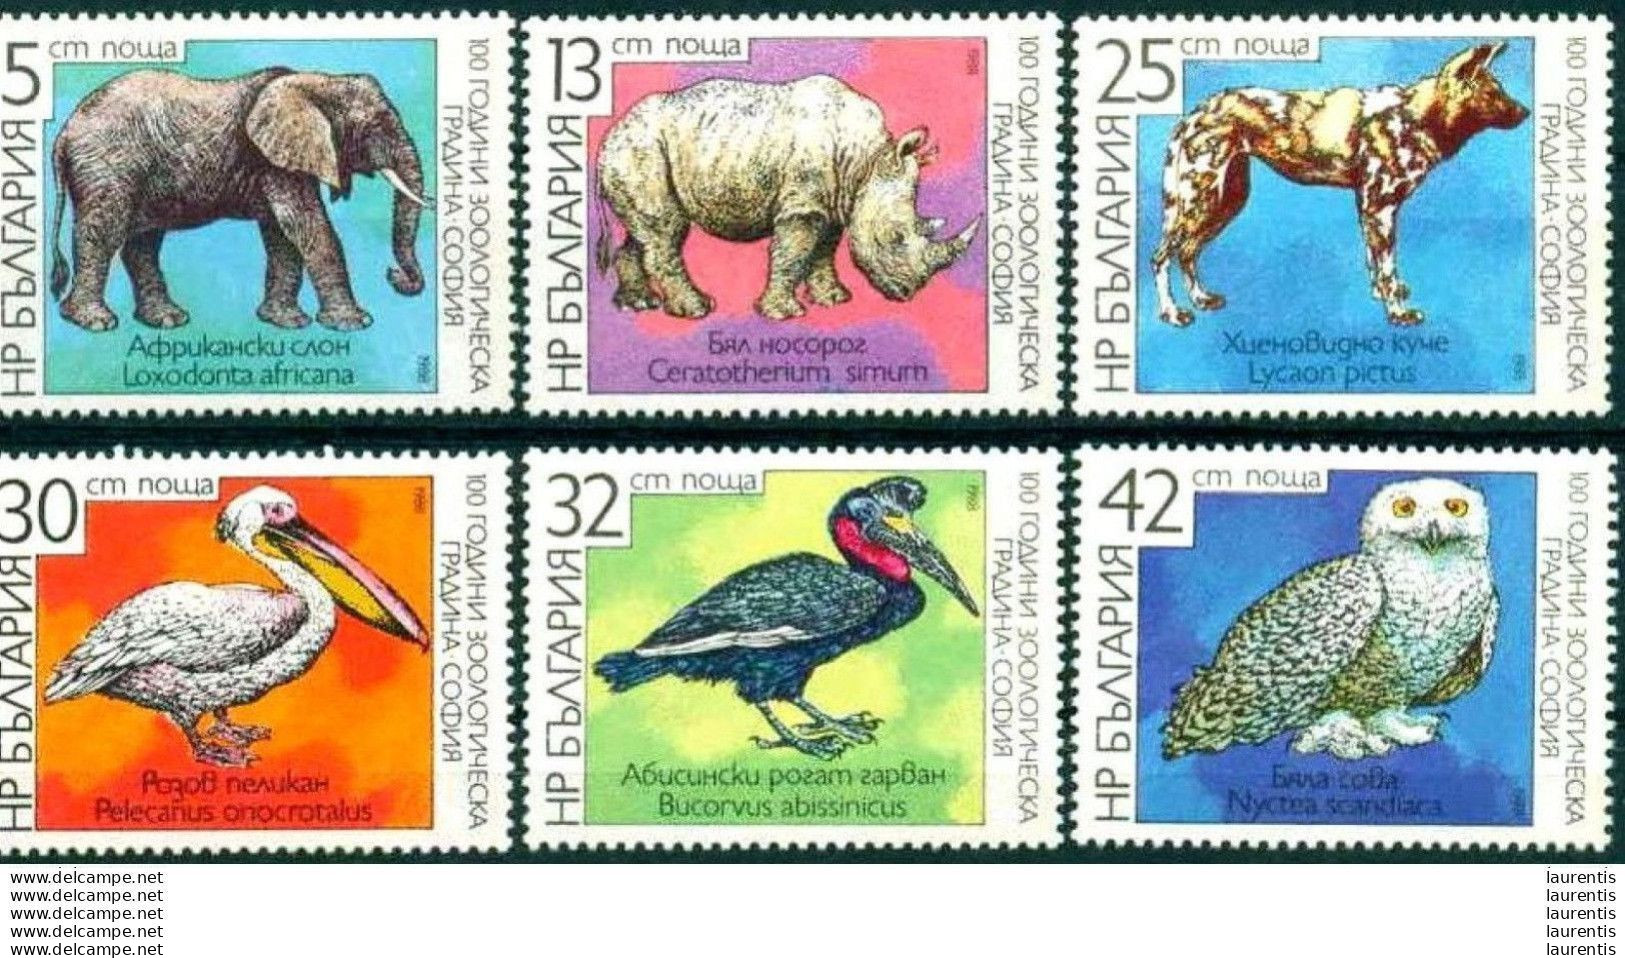 D2861  Owls -  Elefants - BIrds - Zoo - Bulgaria Yv 3268-73 MNH - Shipping To Any Country 0,75€ - 1,35 (x-40-190) - Gufi E Civette